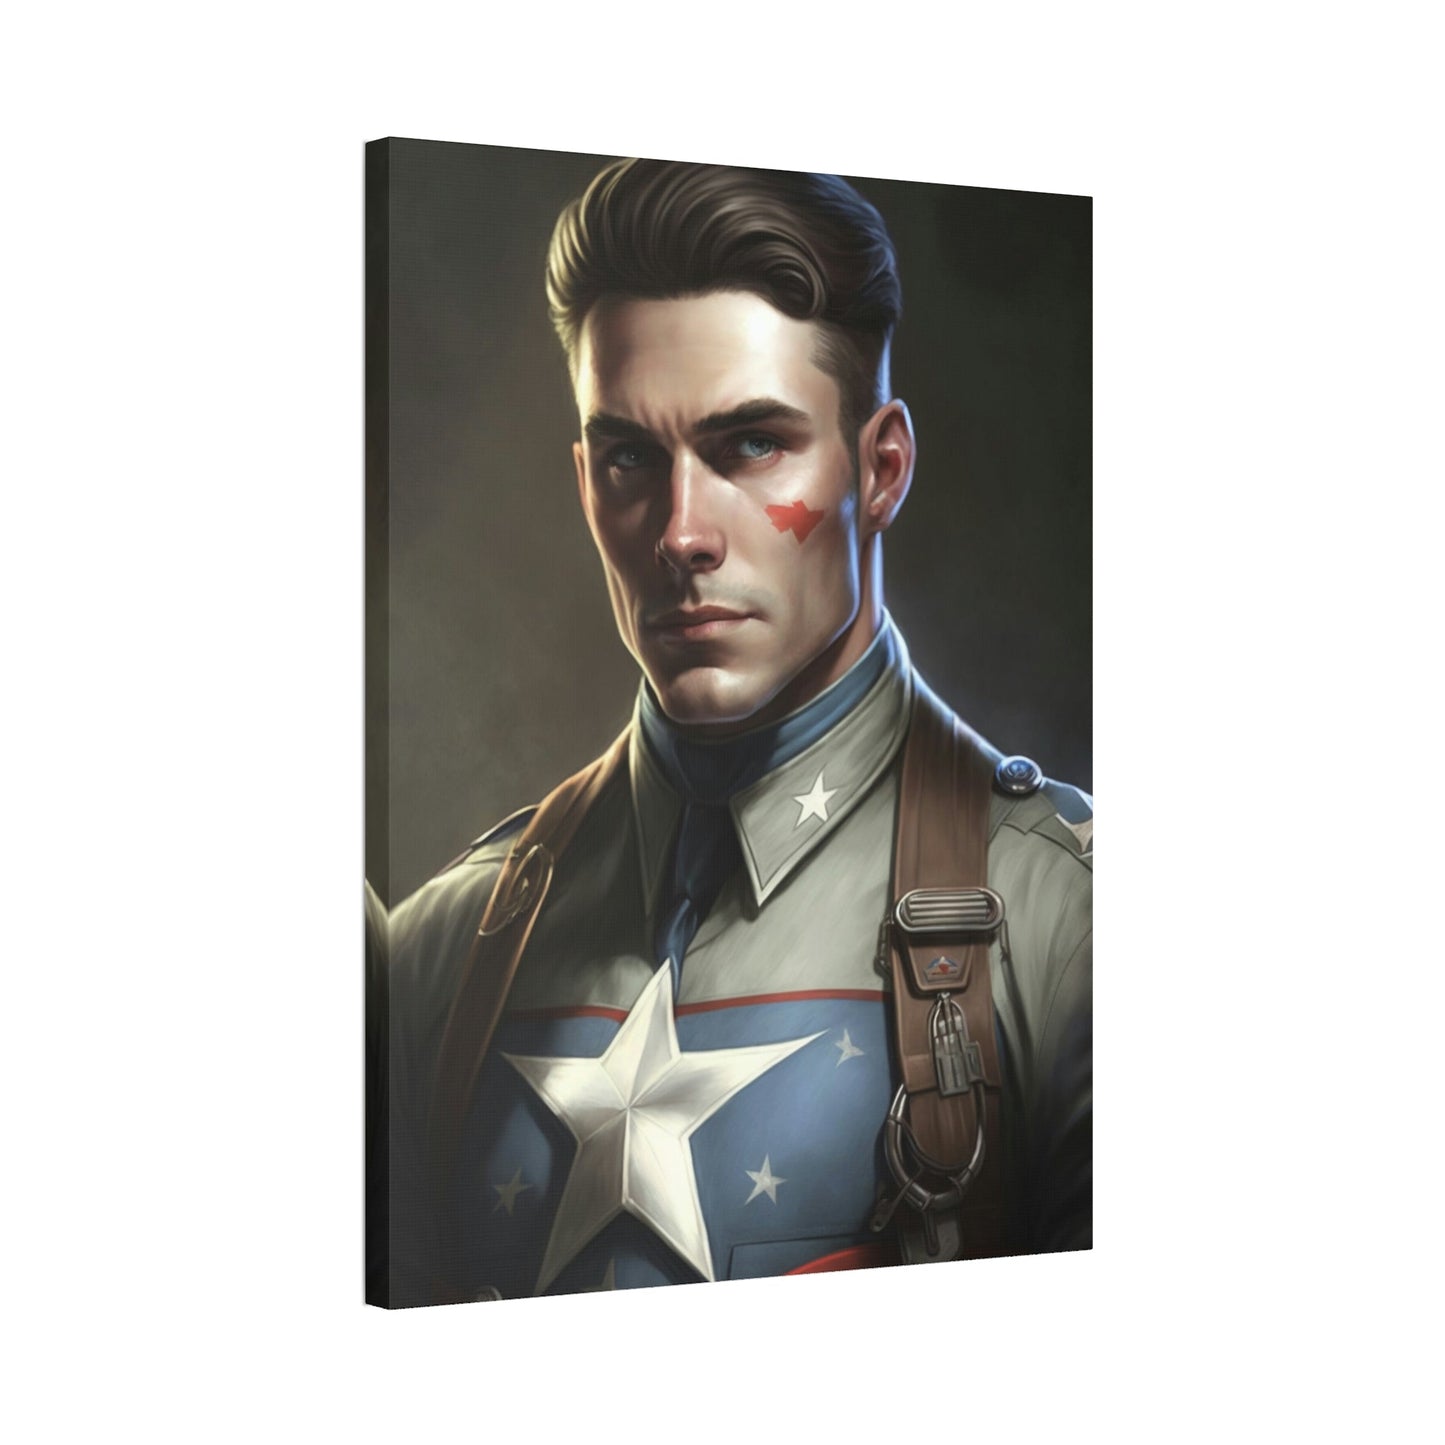 Marvelous Art: Captain America Print on Canvas and Wall Art Decor